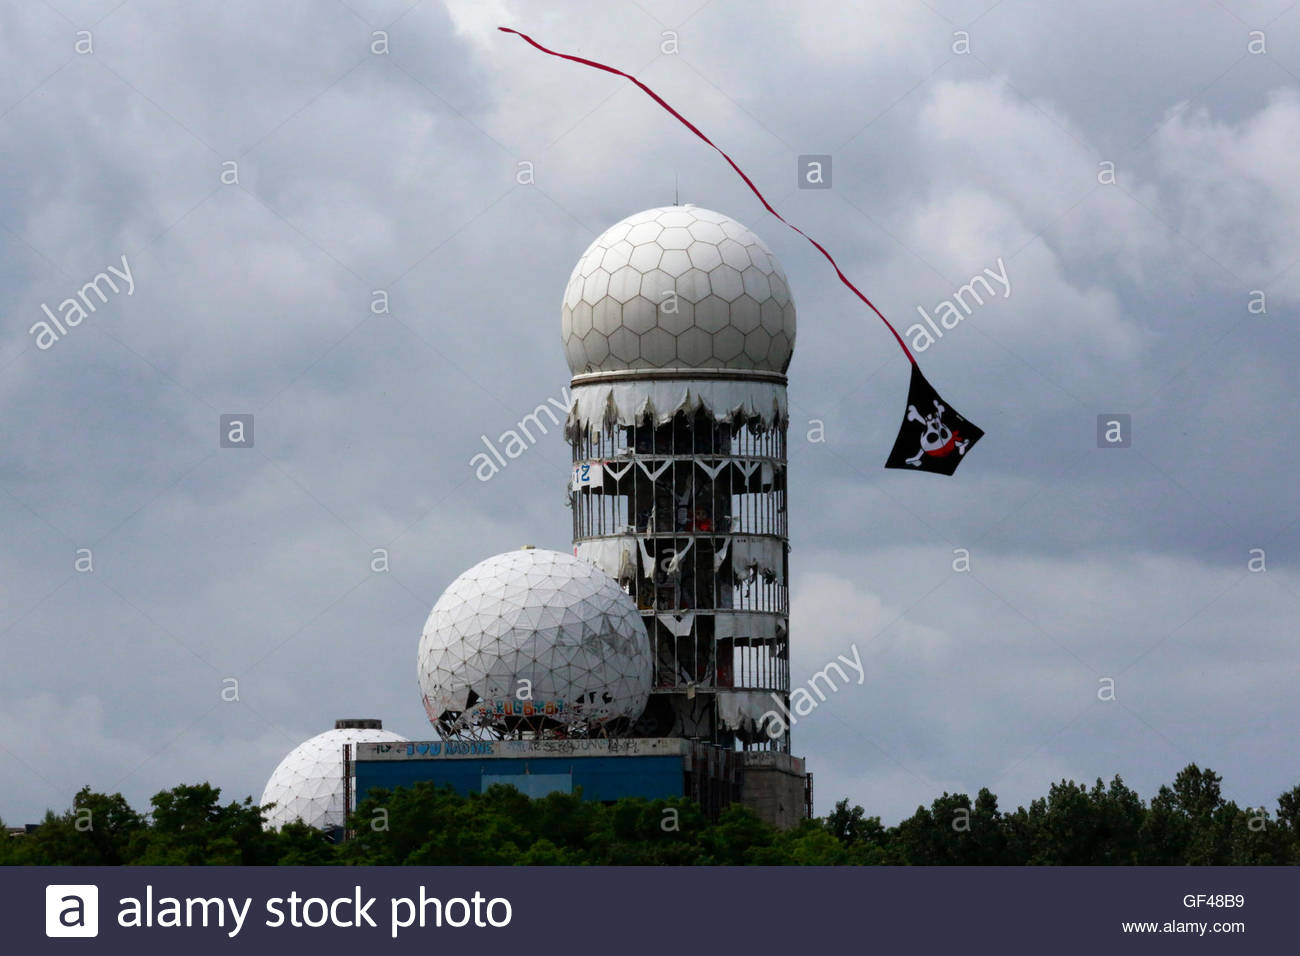 a-kite-flies-near-antennas-of-former-national-security-agency-nsa-GF48B9.jpg